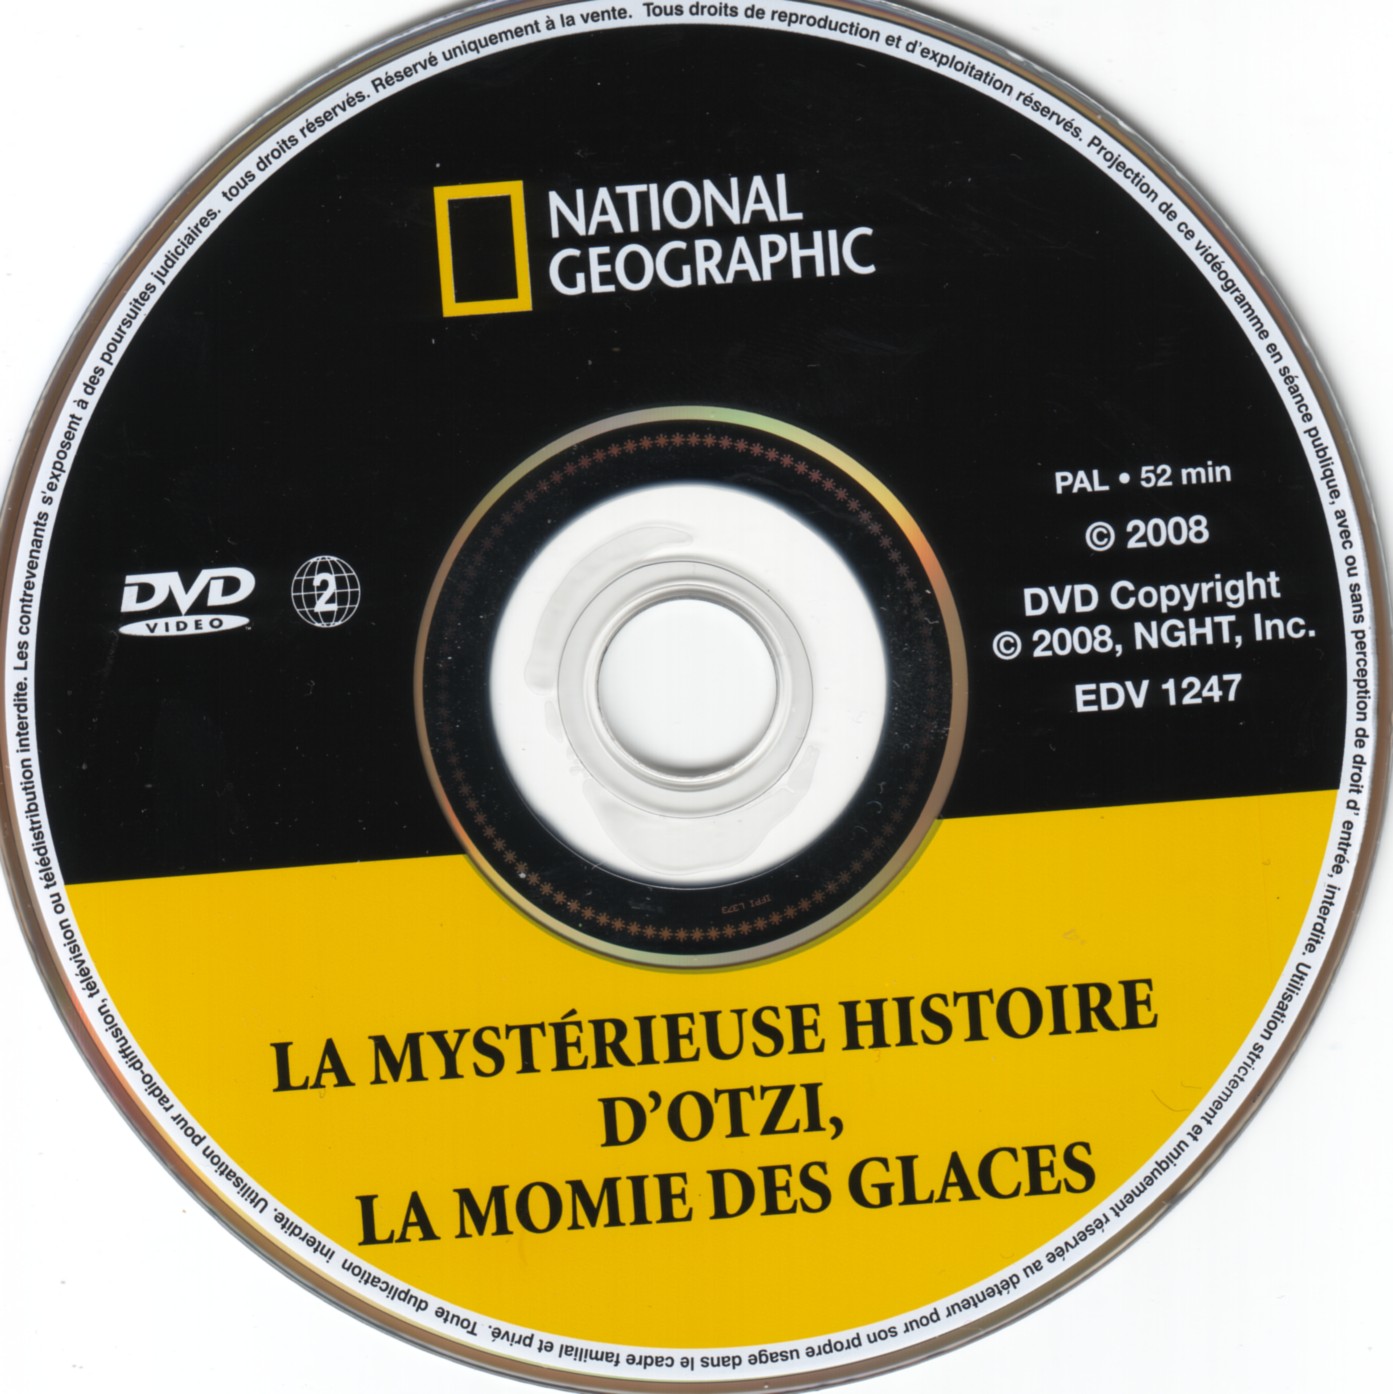 National Geographic - La mystrieuse histoire d